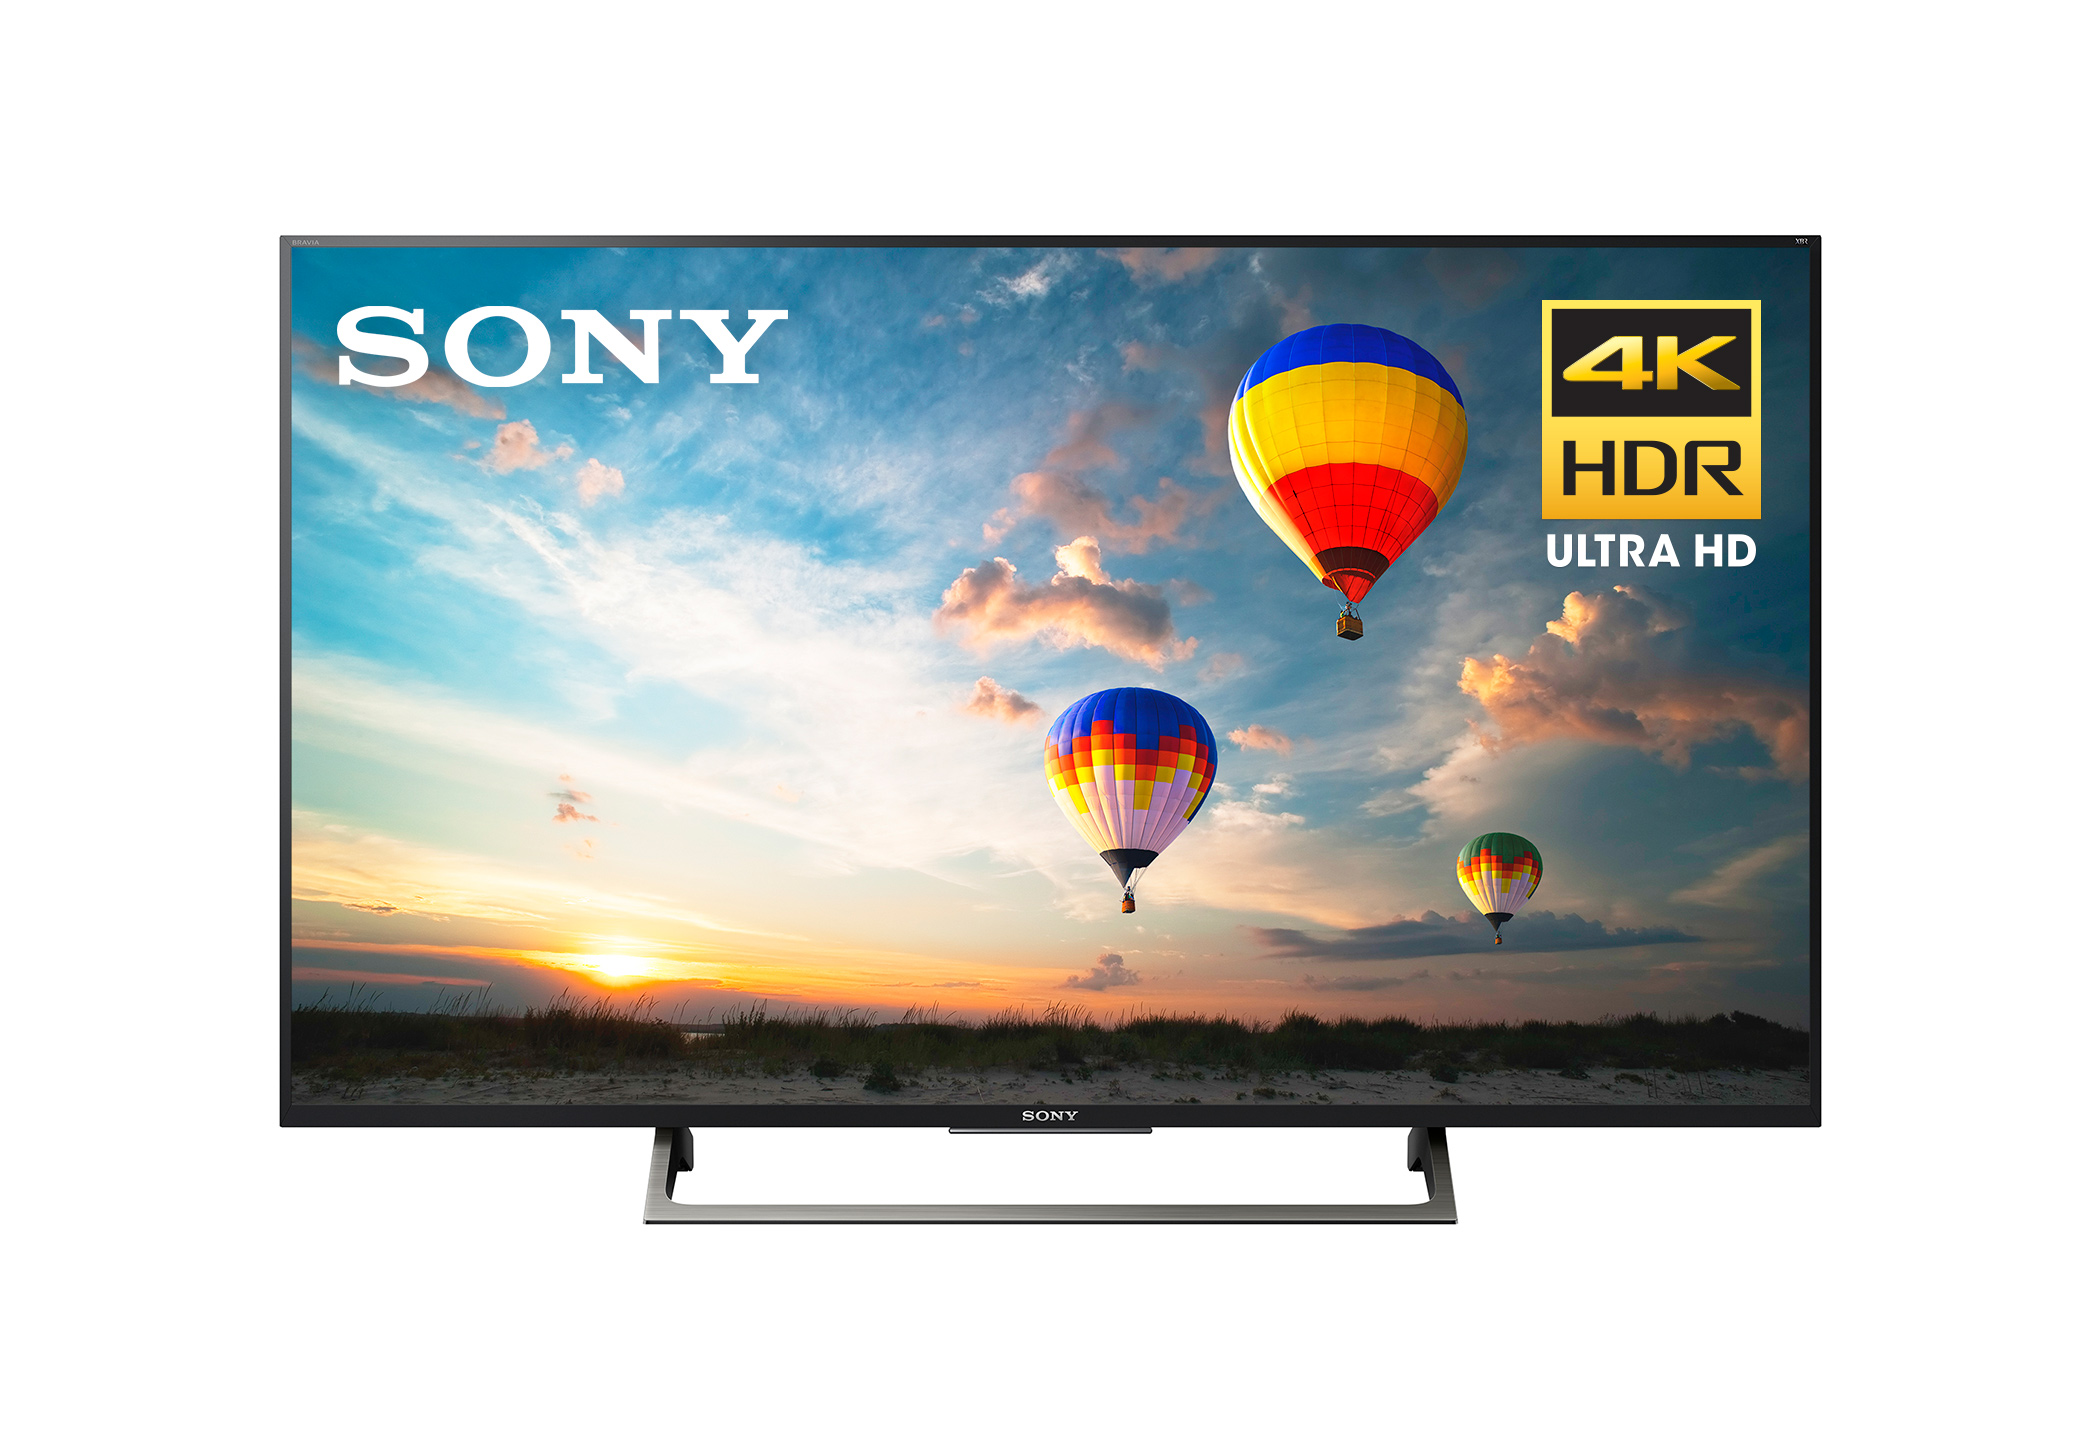 Sony 55" Class 4K (2160P) Smart LED TV (XBR55X800E) - image 1 of 14